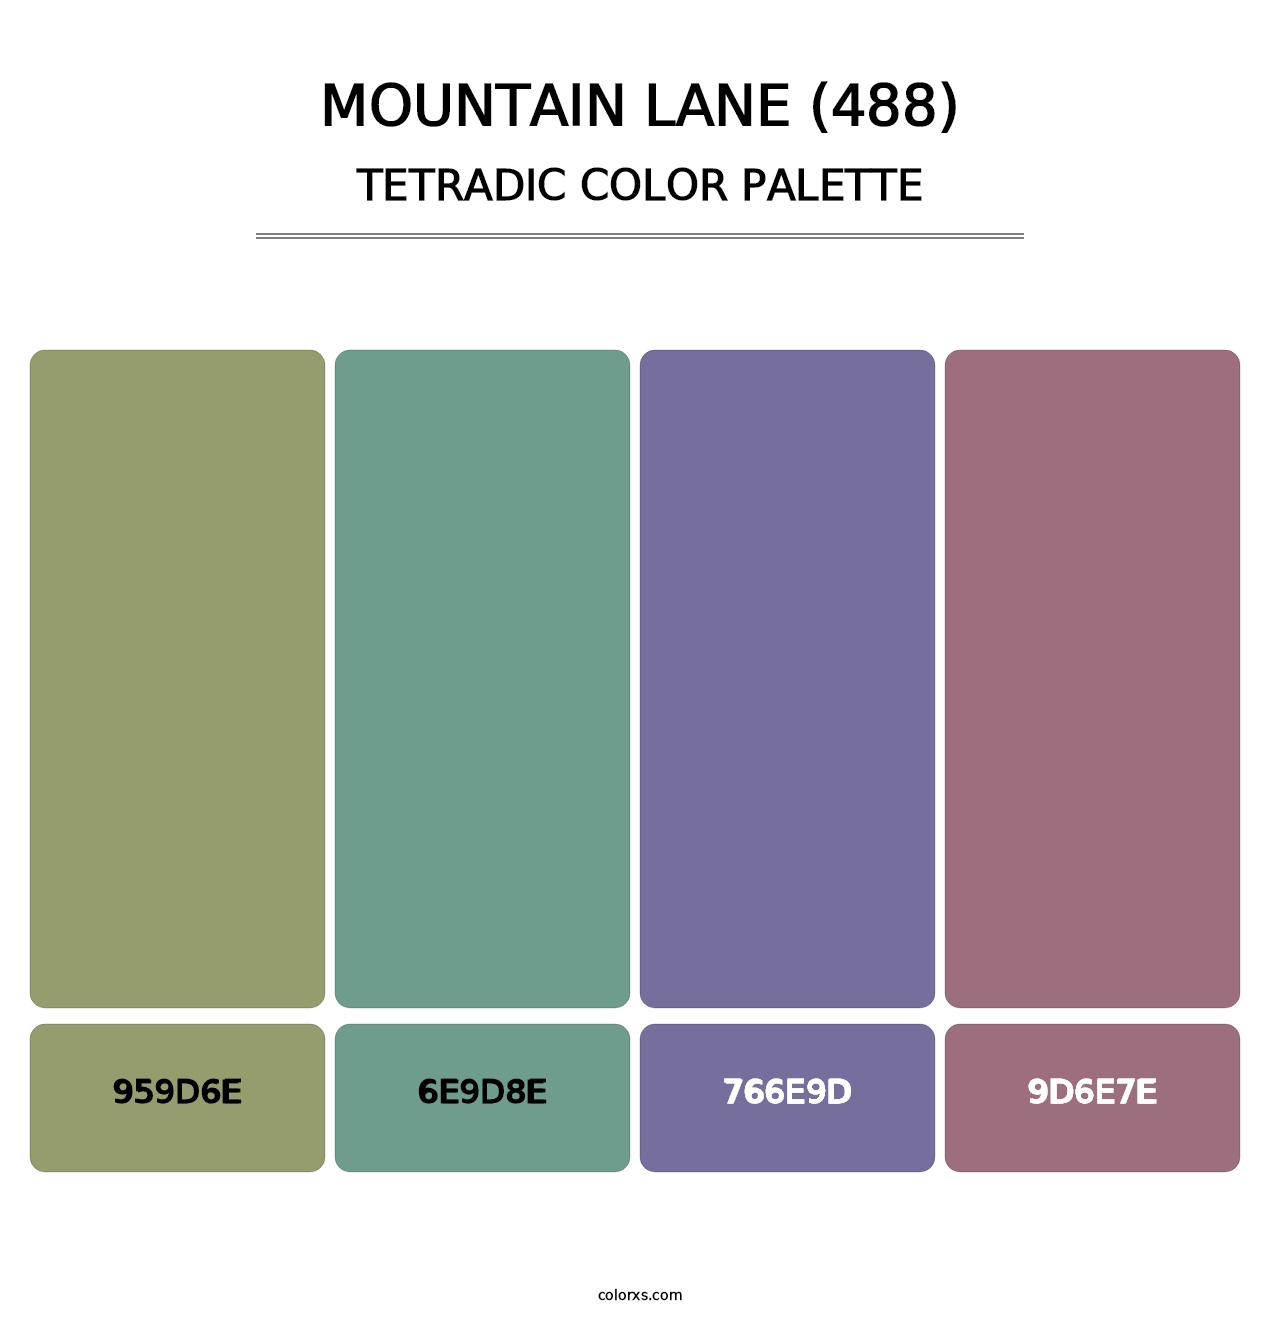 Mountain Lane (488) - Tetradic Color Palette